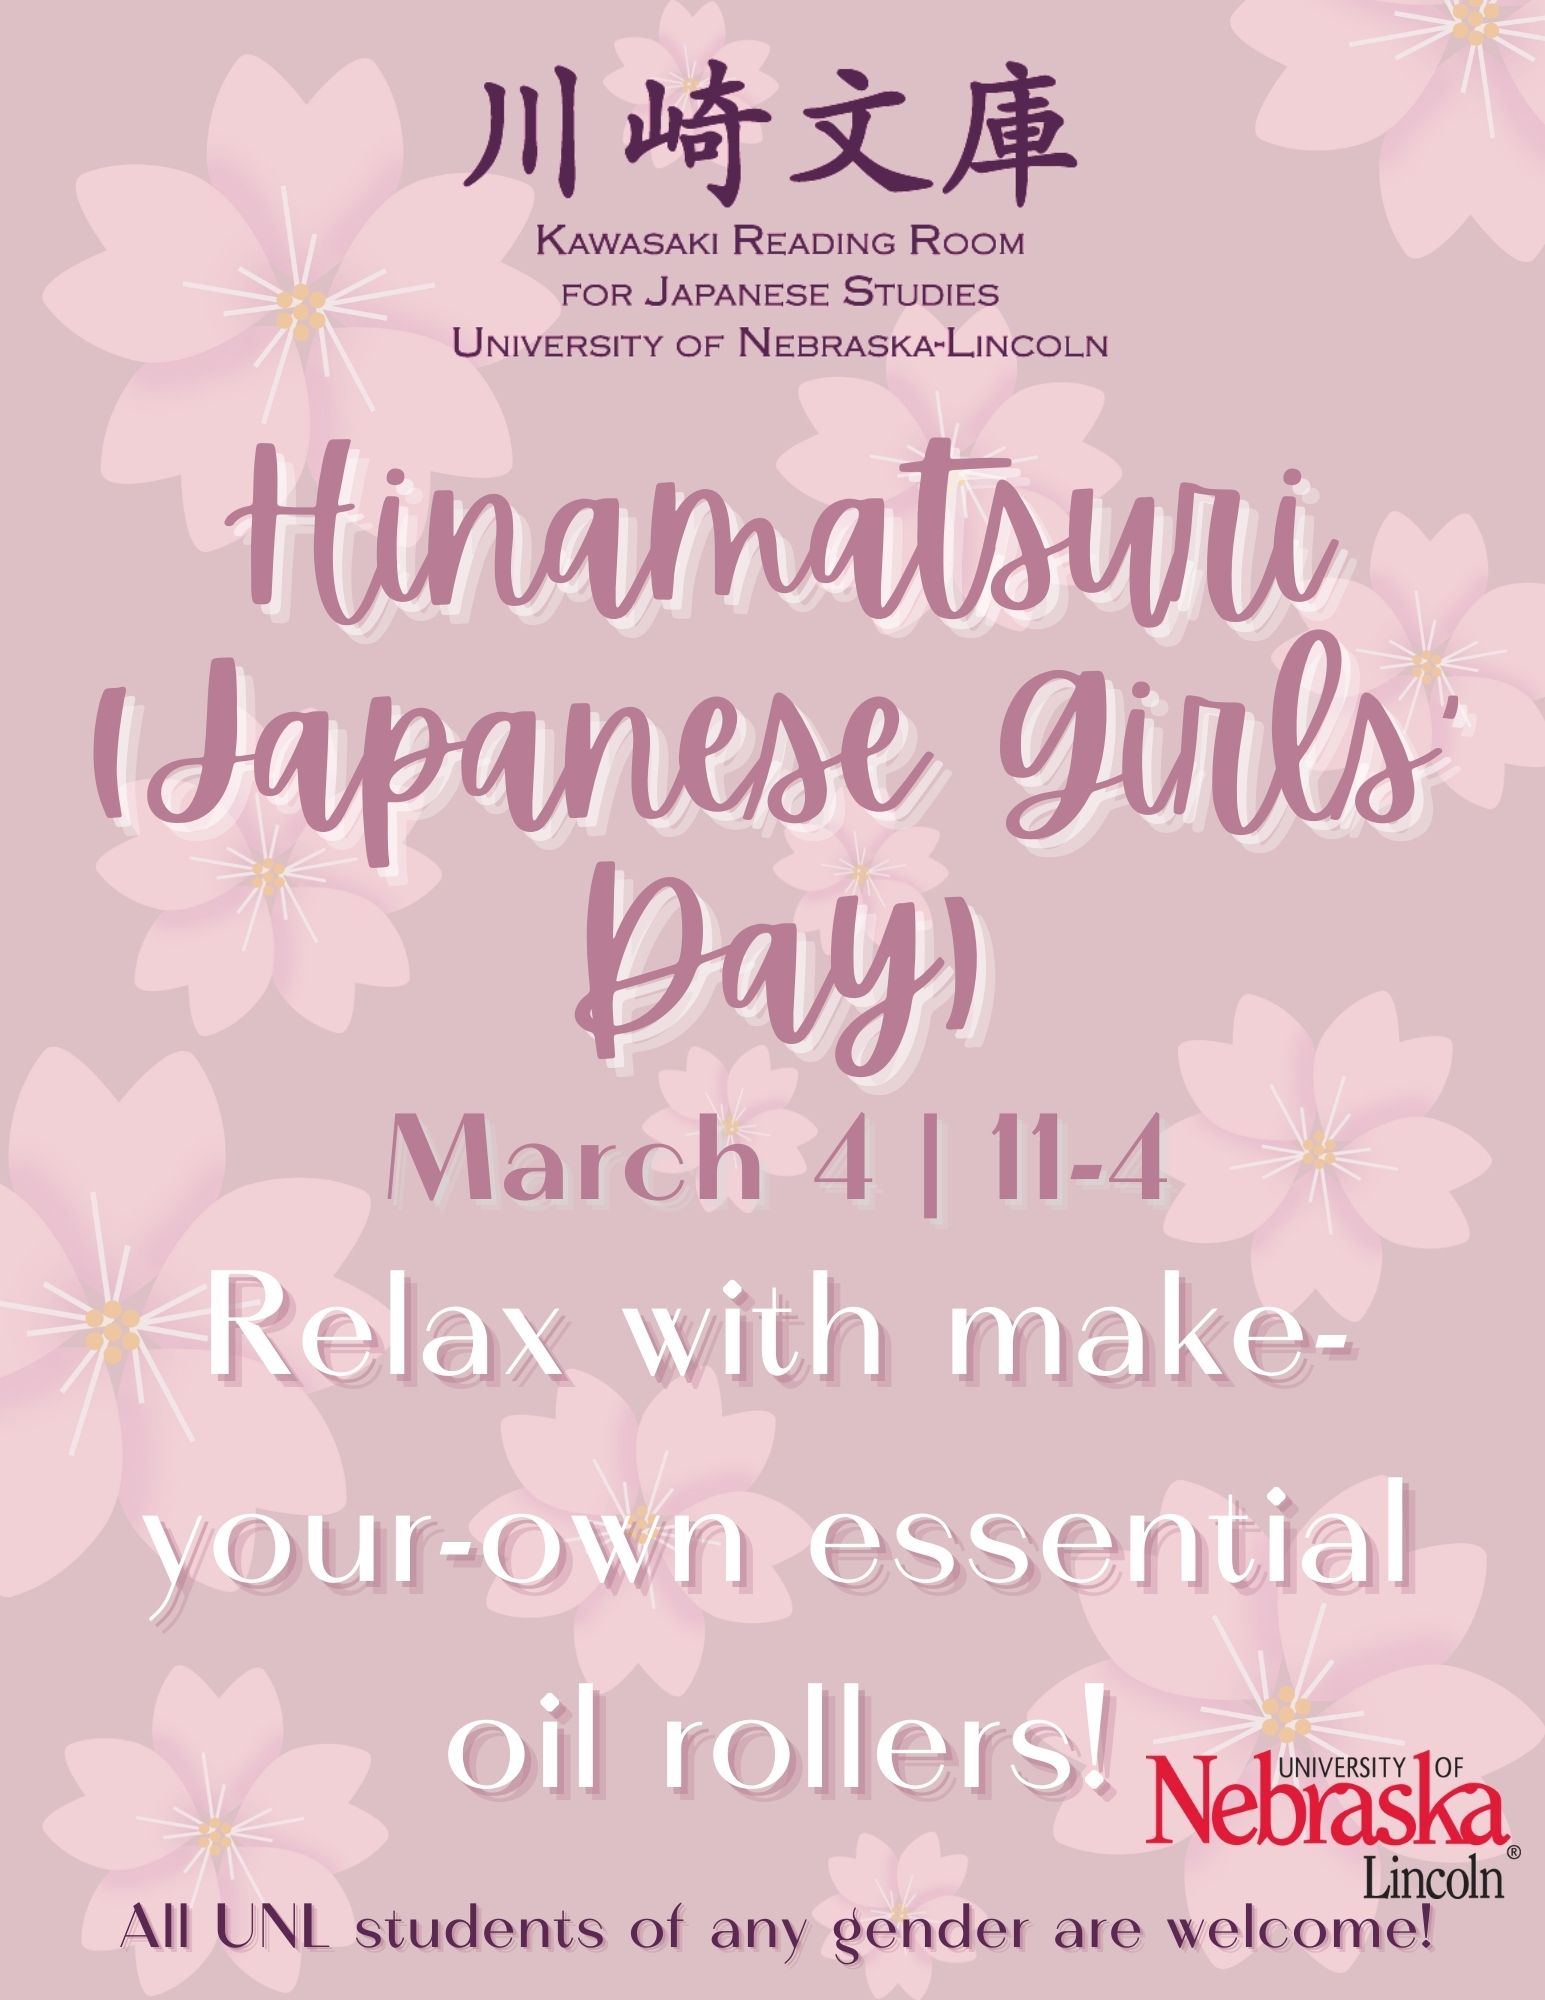 Celebrate Hinamatsuri (Japanese Girls' Day) with the KRR!